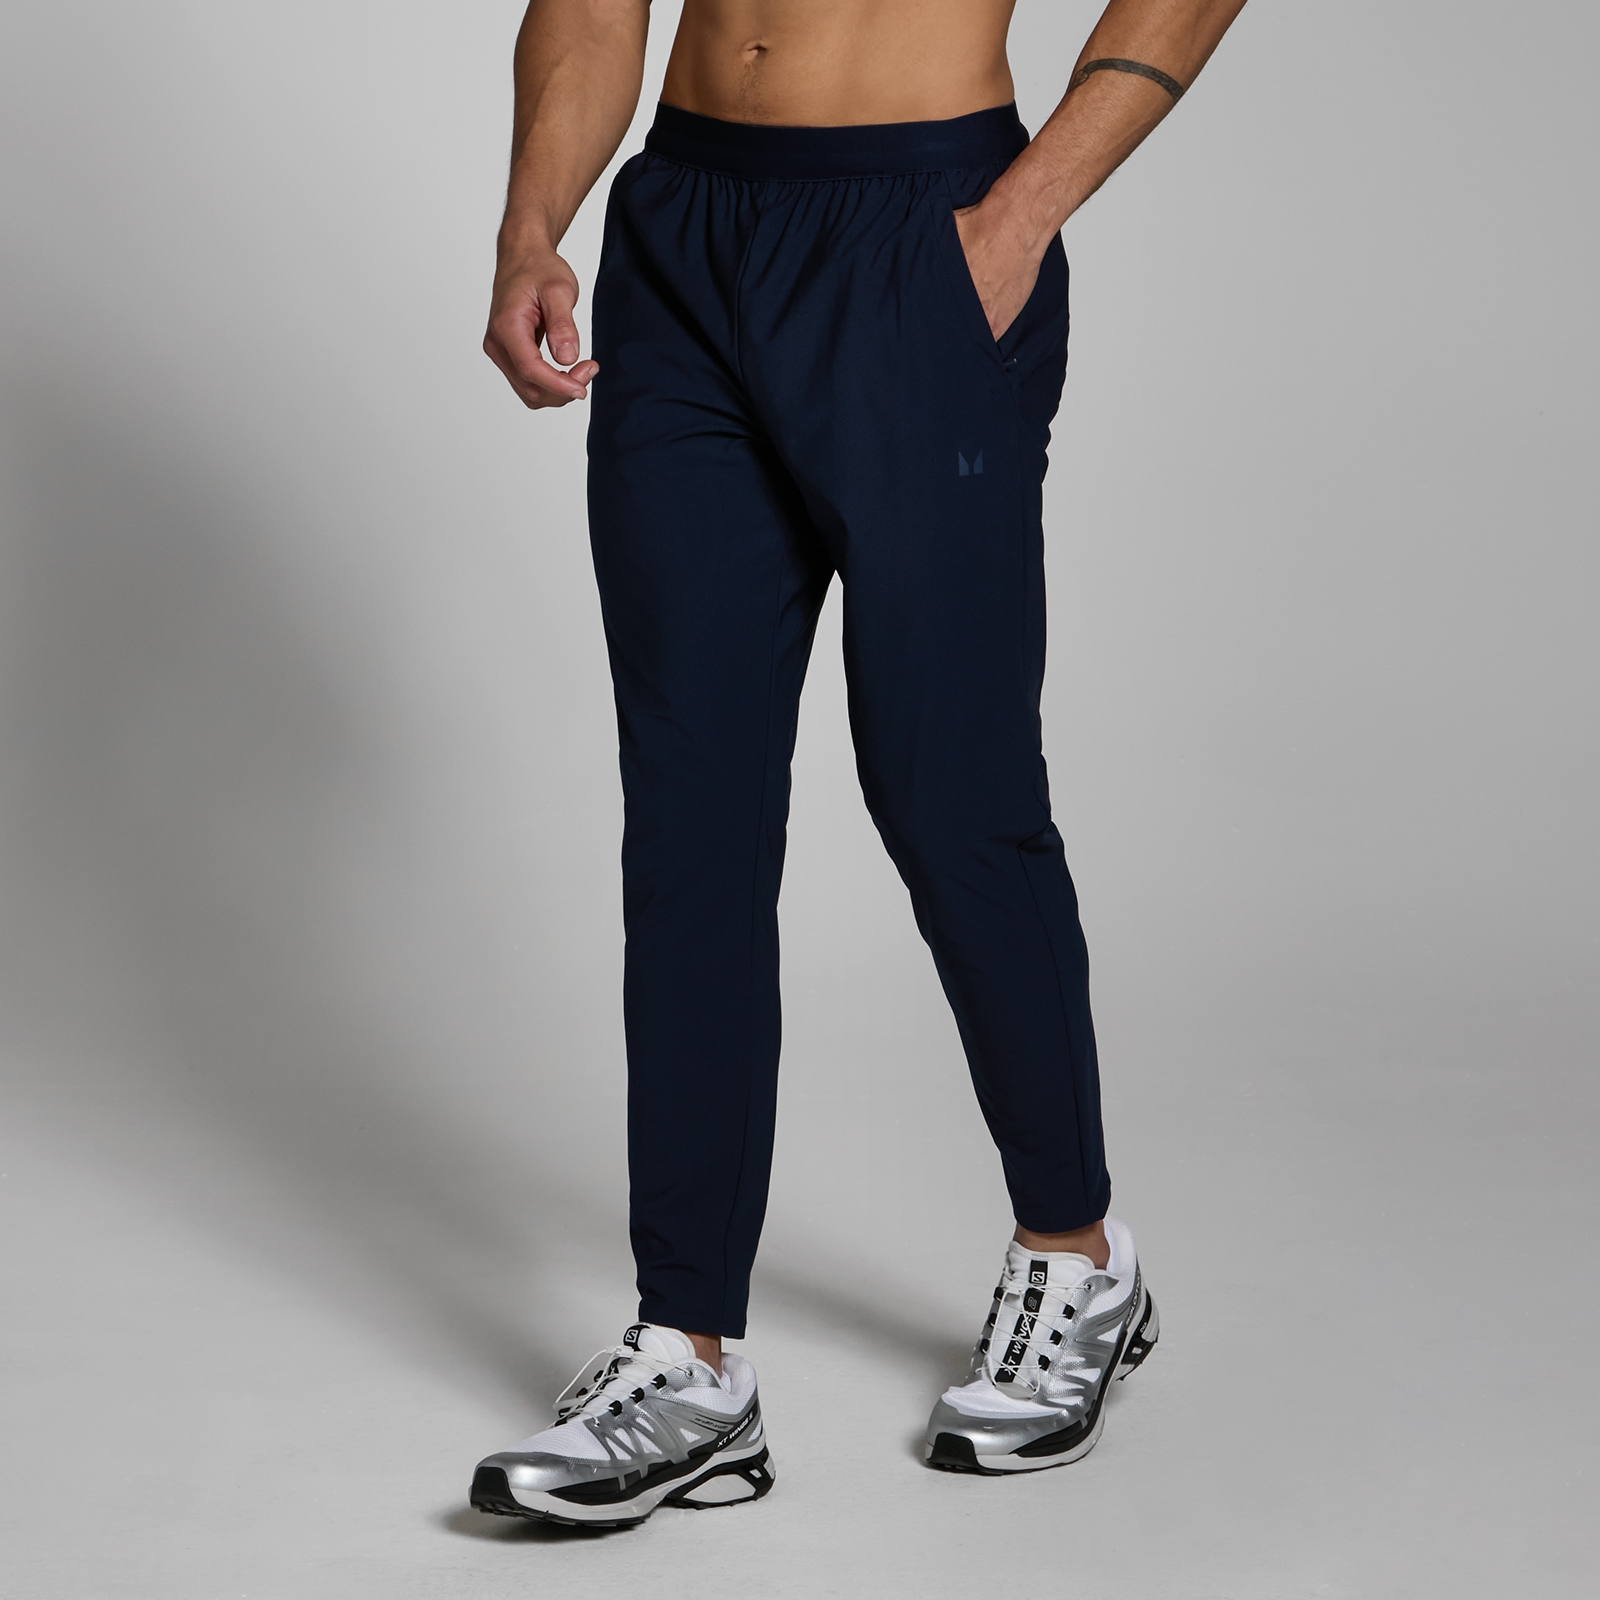 Image of Pantaloni da jogging in tessuto MP Lifestyle da uomo - Blu navy scuro - XS